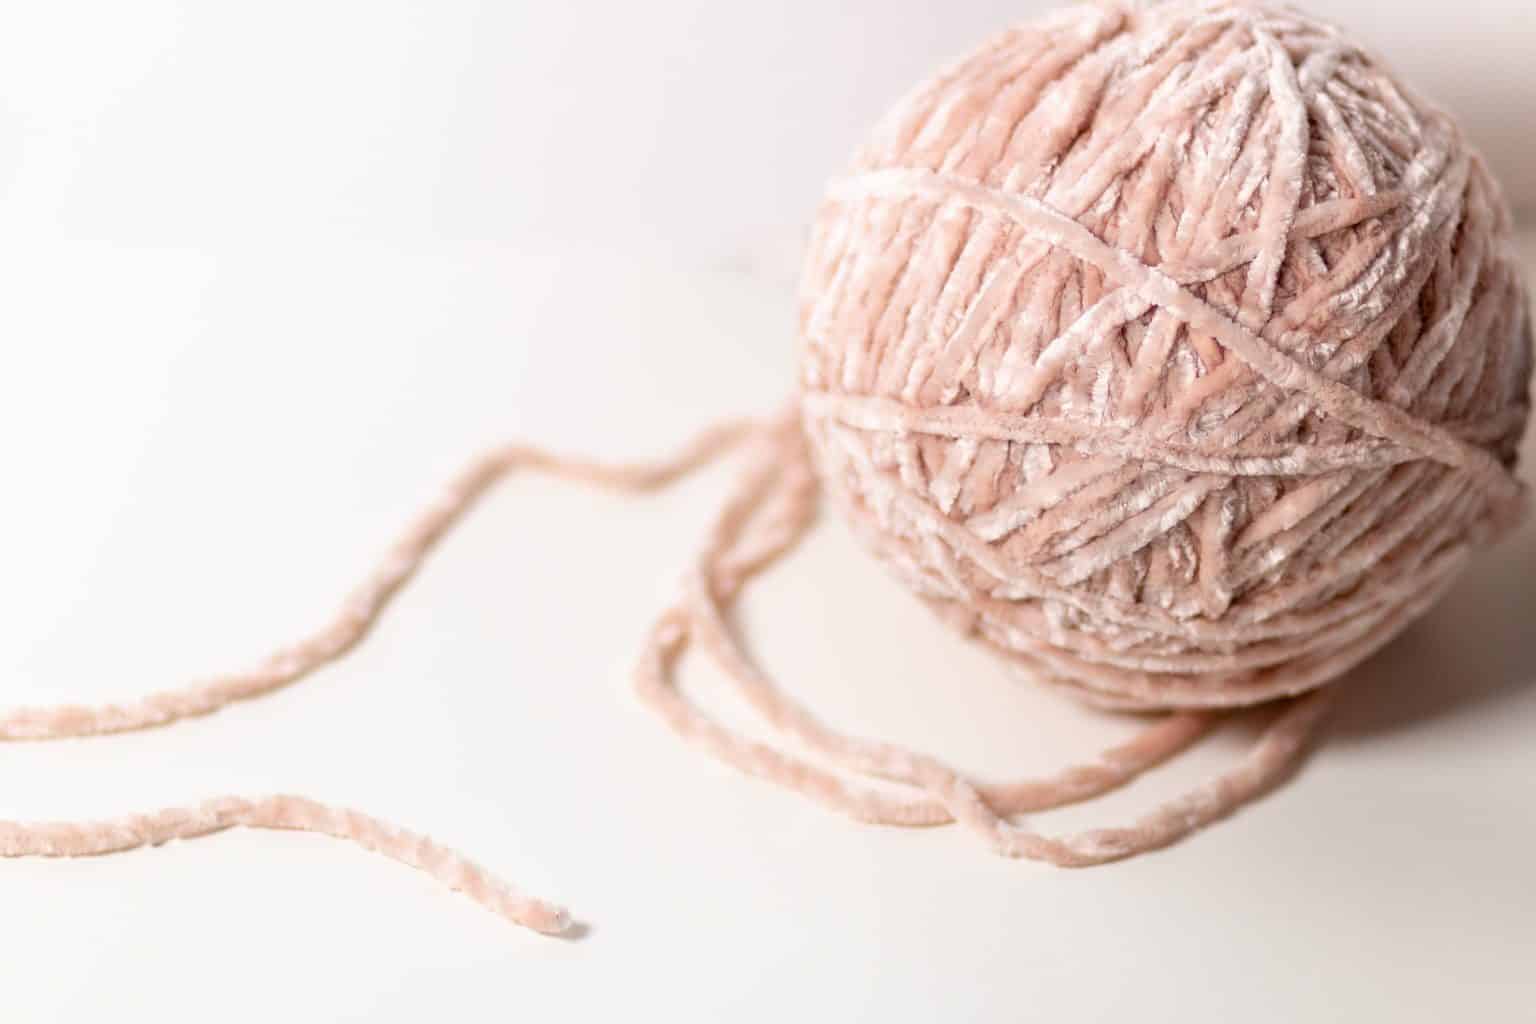 Bernat Velvet Yarn 100% Polyester Luxuriously Soft for Velvety Projects for  Home Knit, Crochet, Lush Blankets or Statement Pillows -  Hong Kong